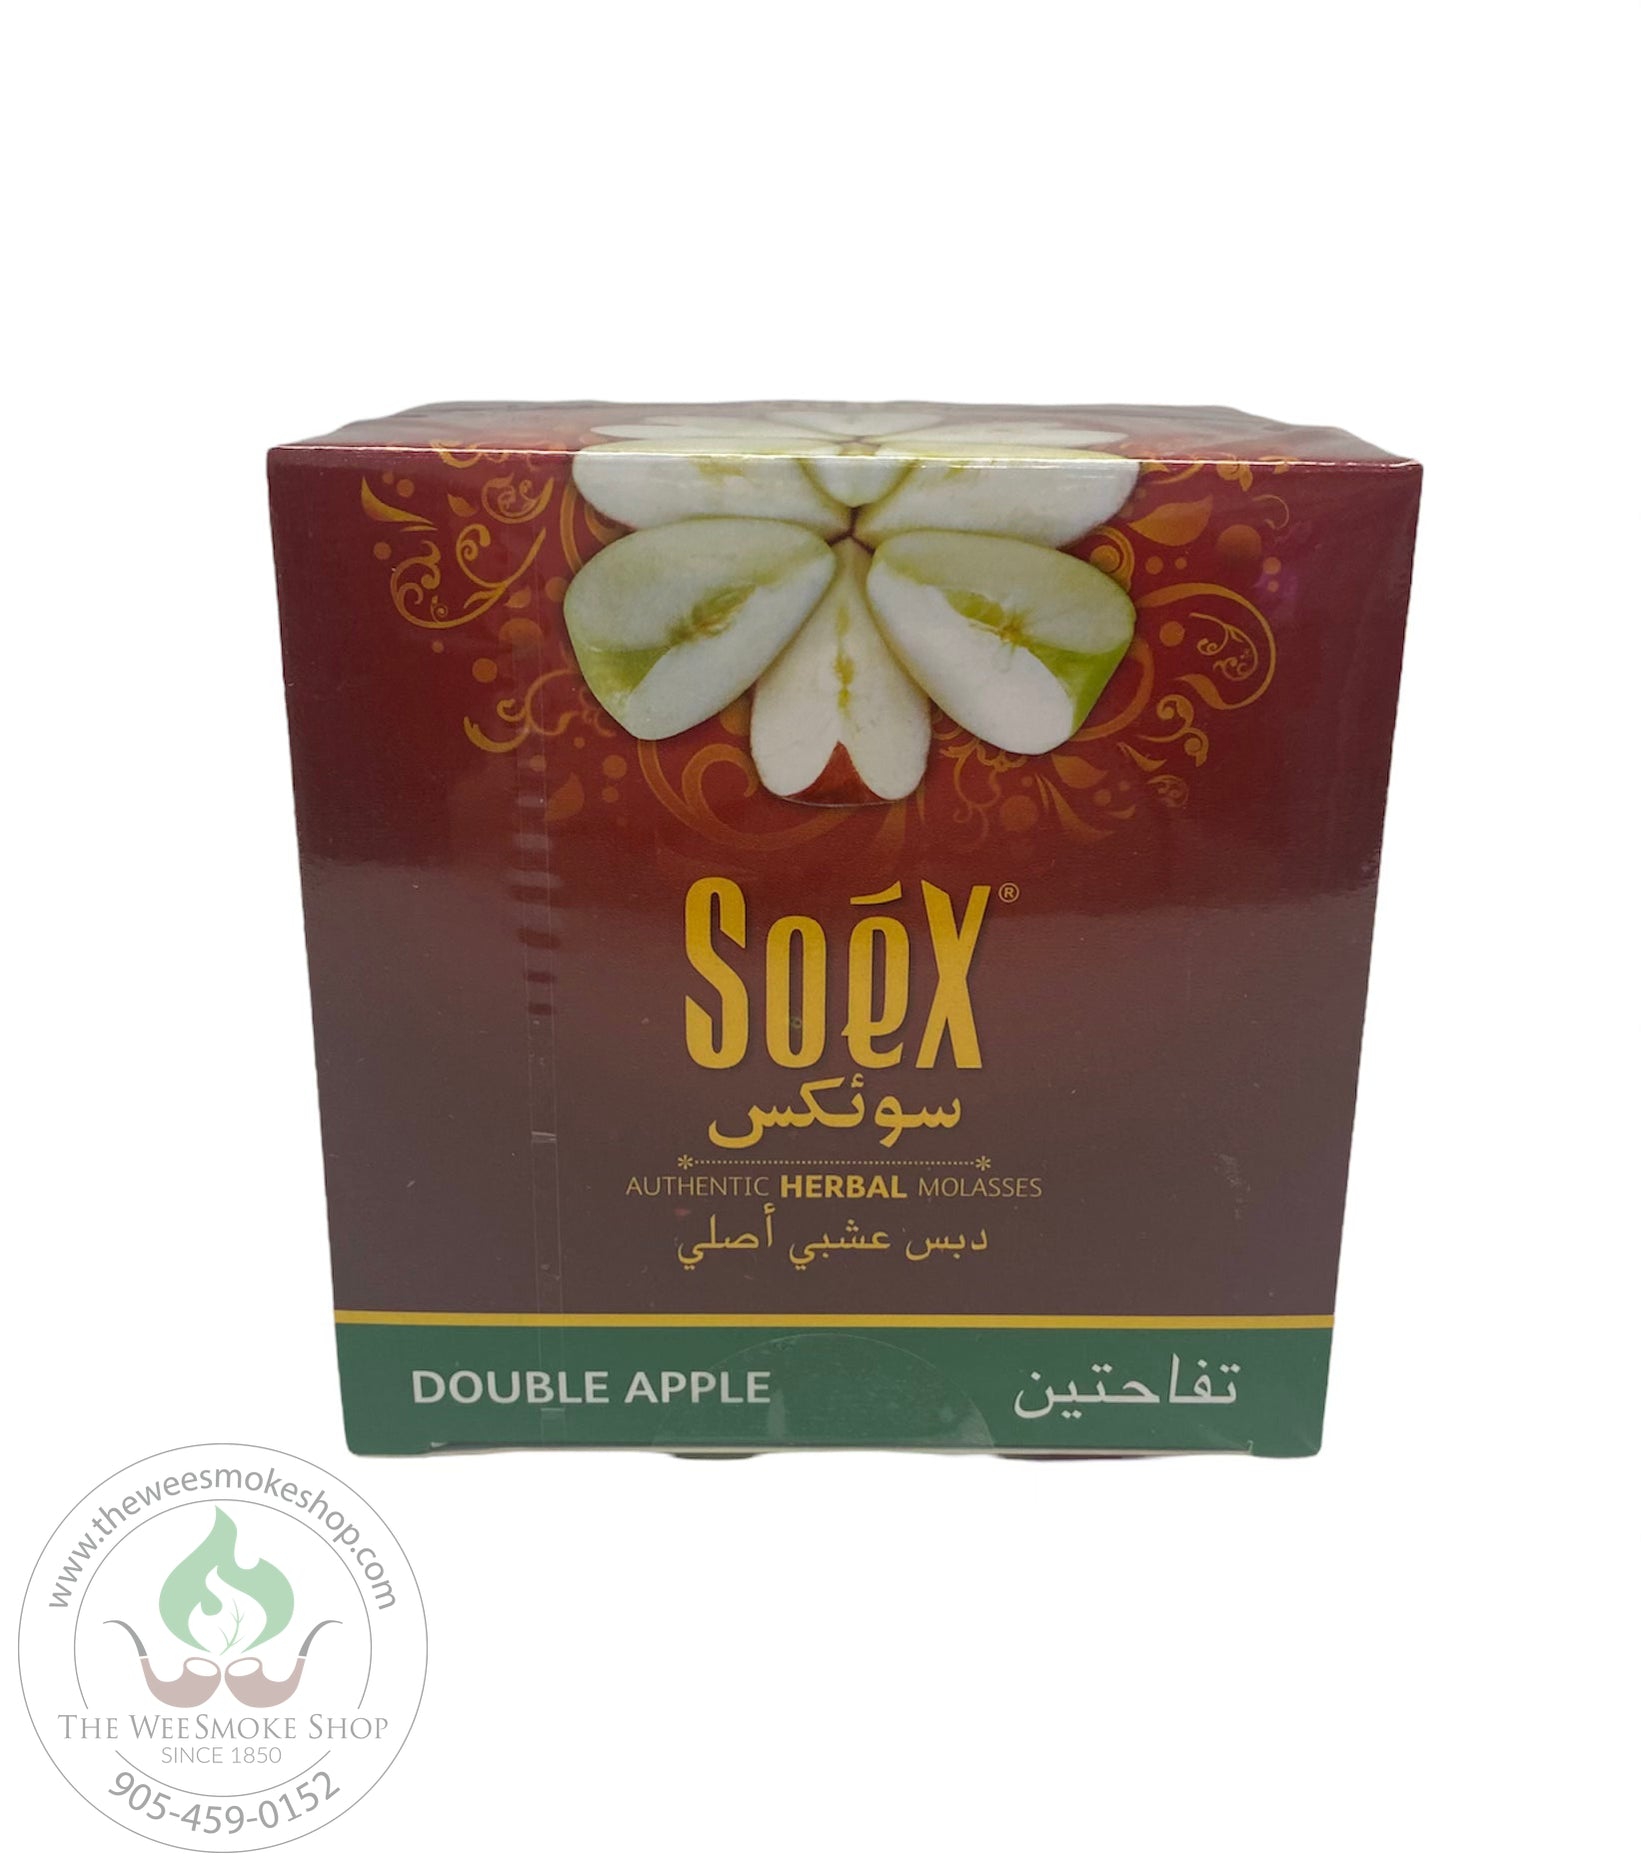 Double Apple Soex Herbal Molasses (250g)-Hookah accessories-The Wee Smoke Shop